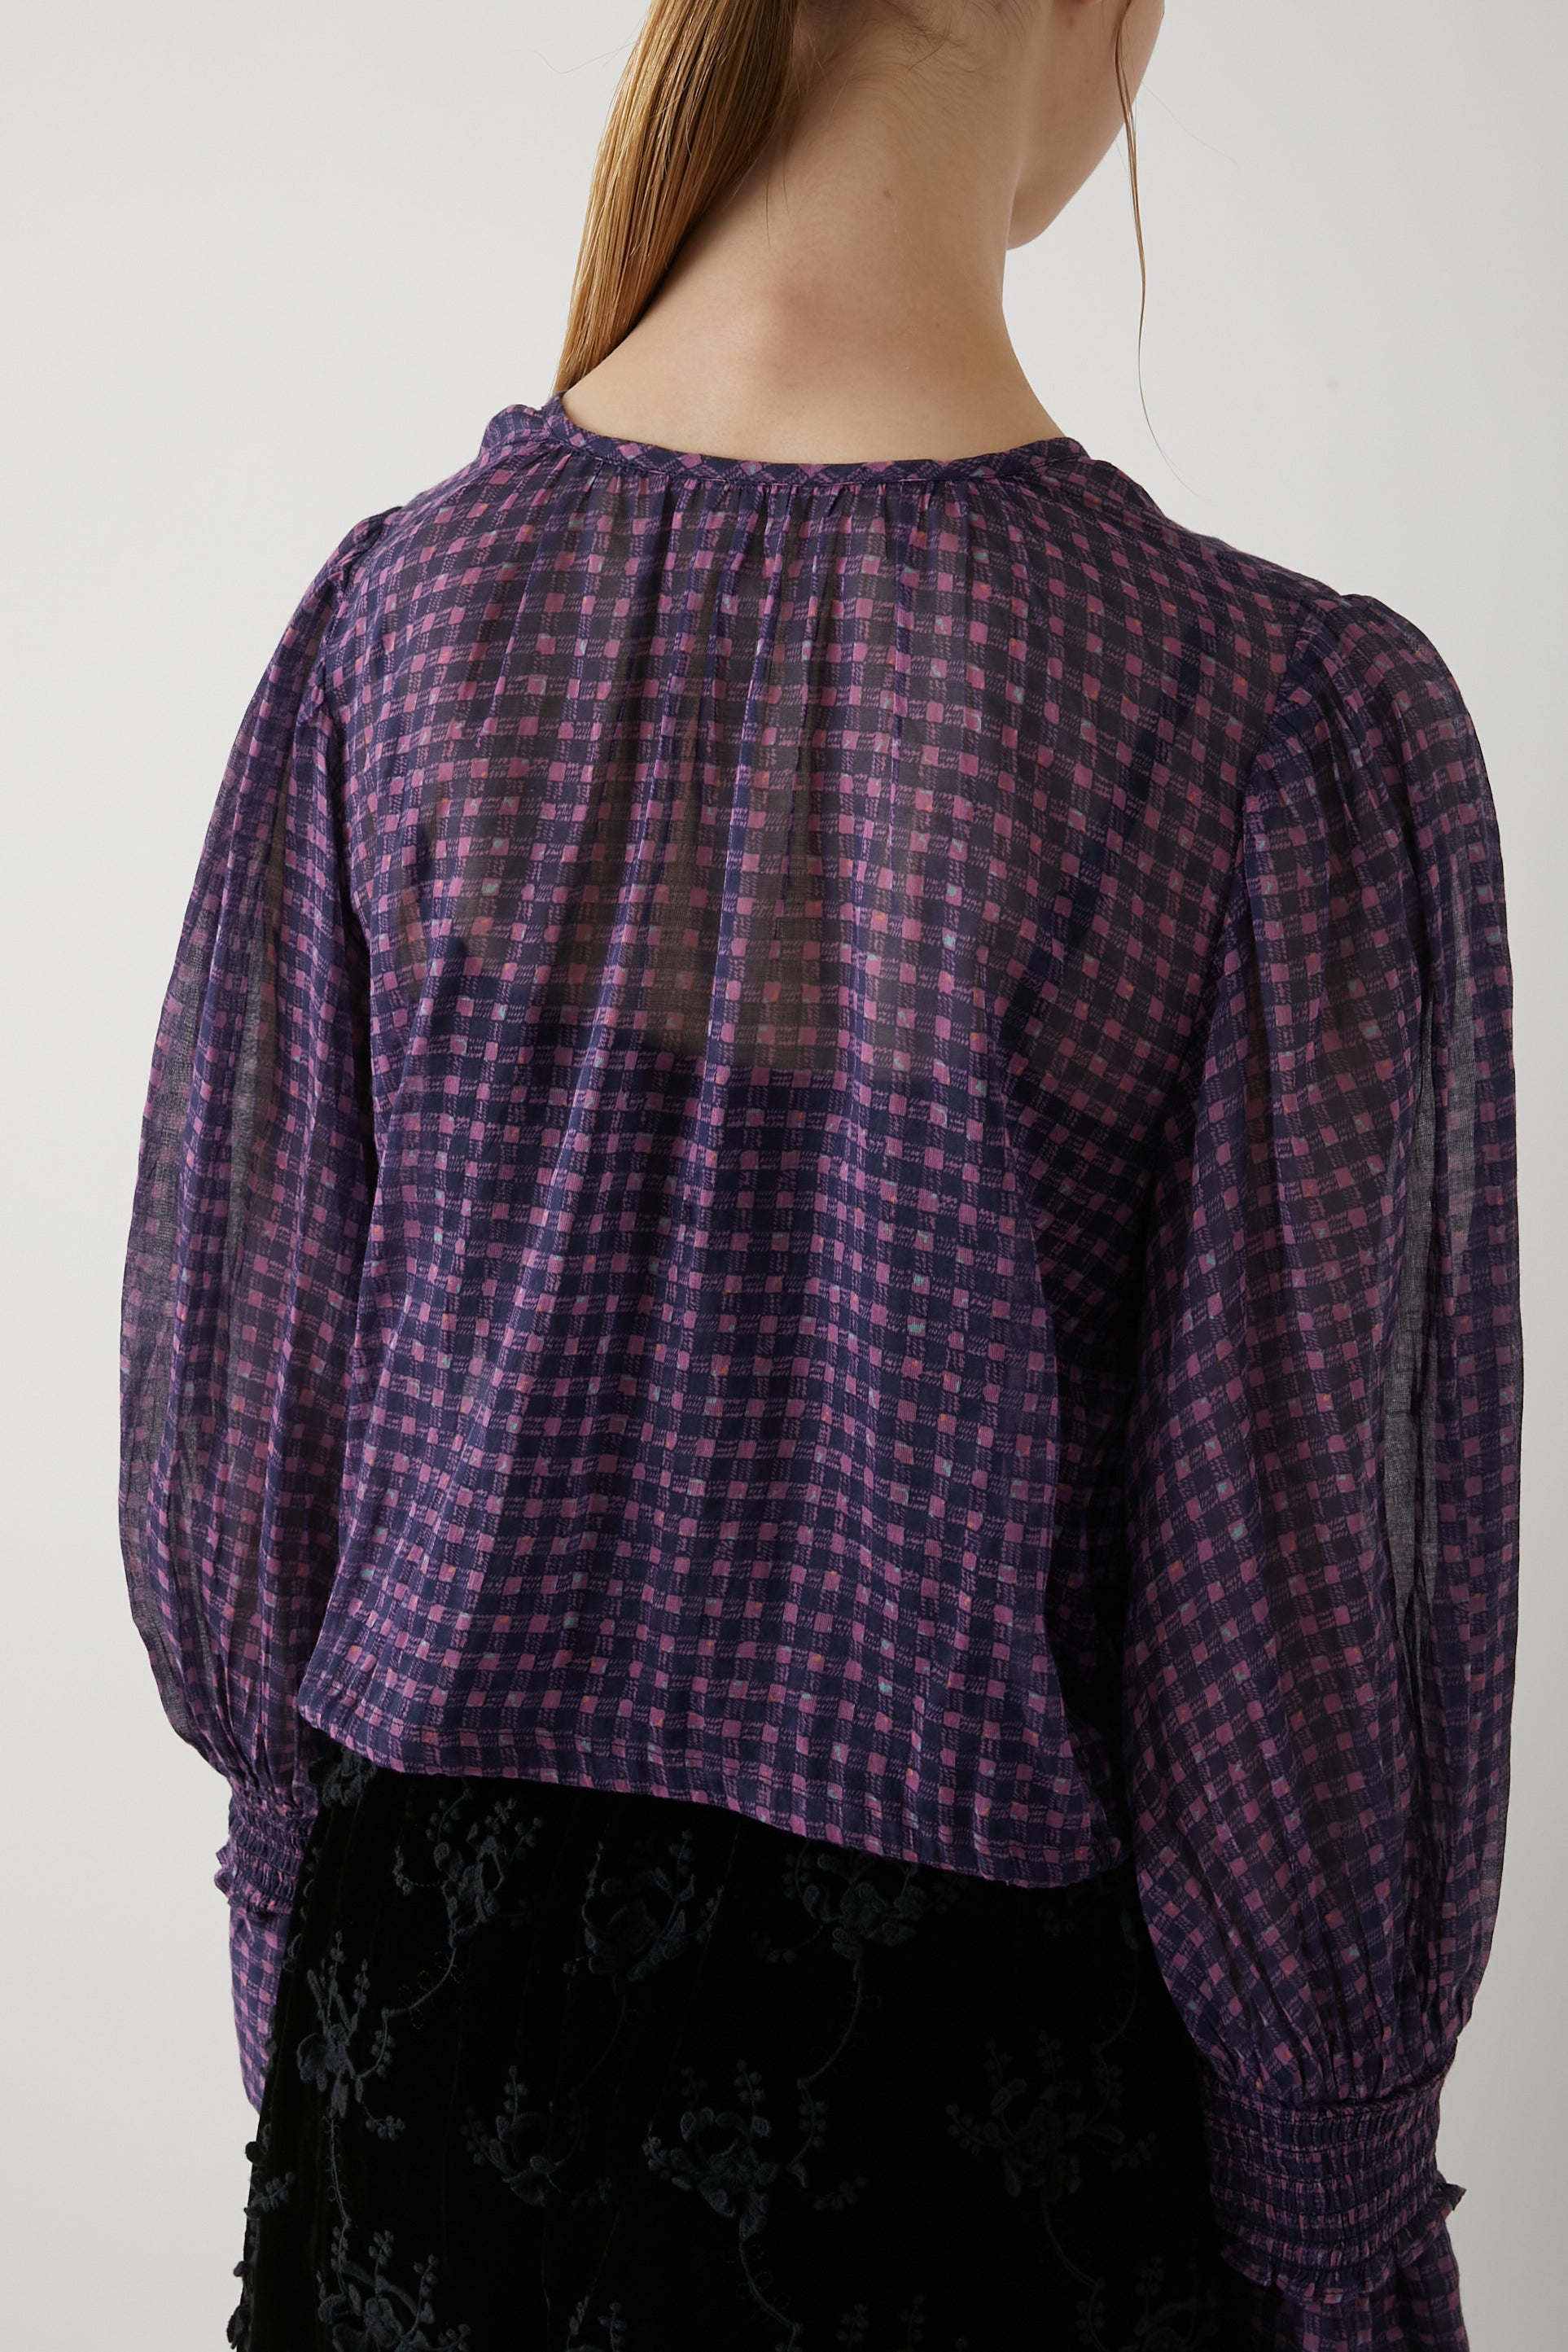 sheer printed blouse │ BERRY